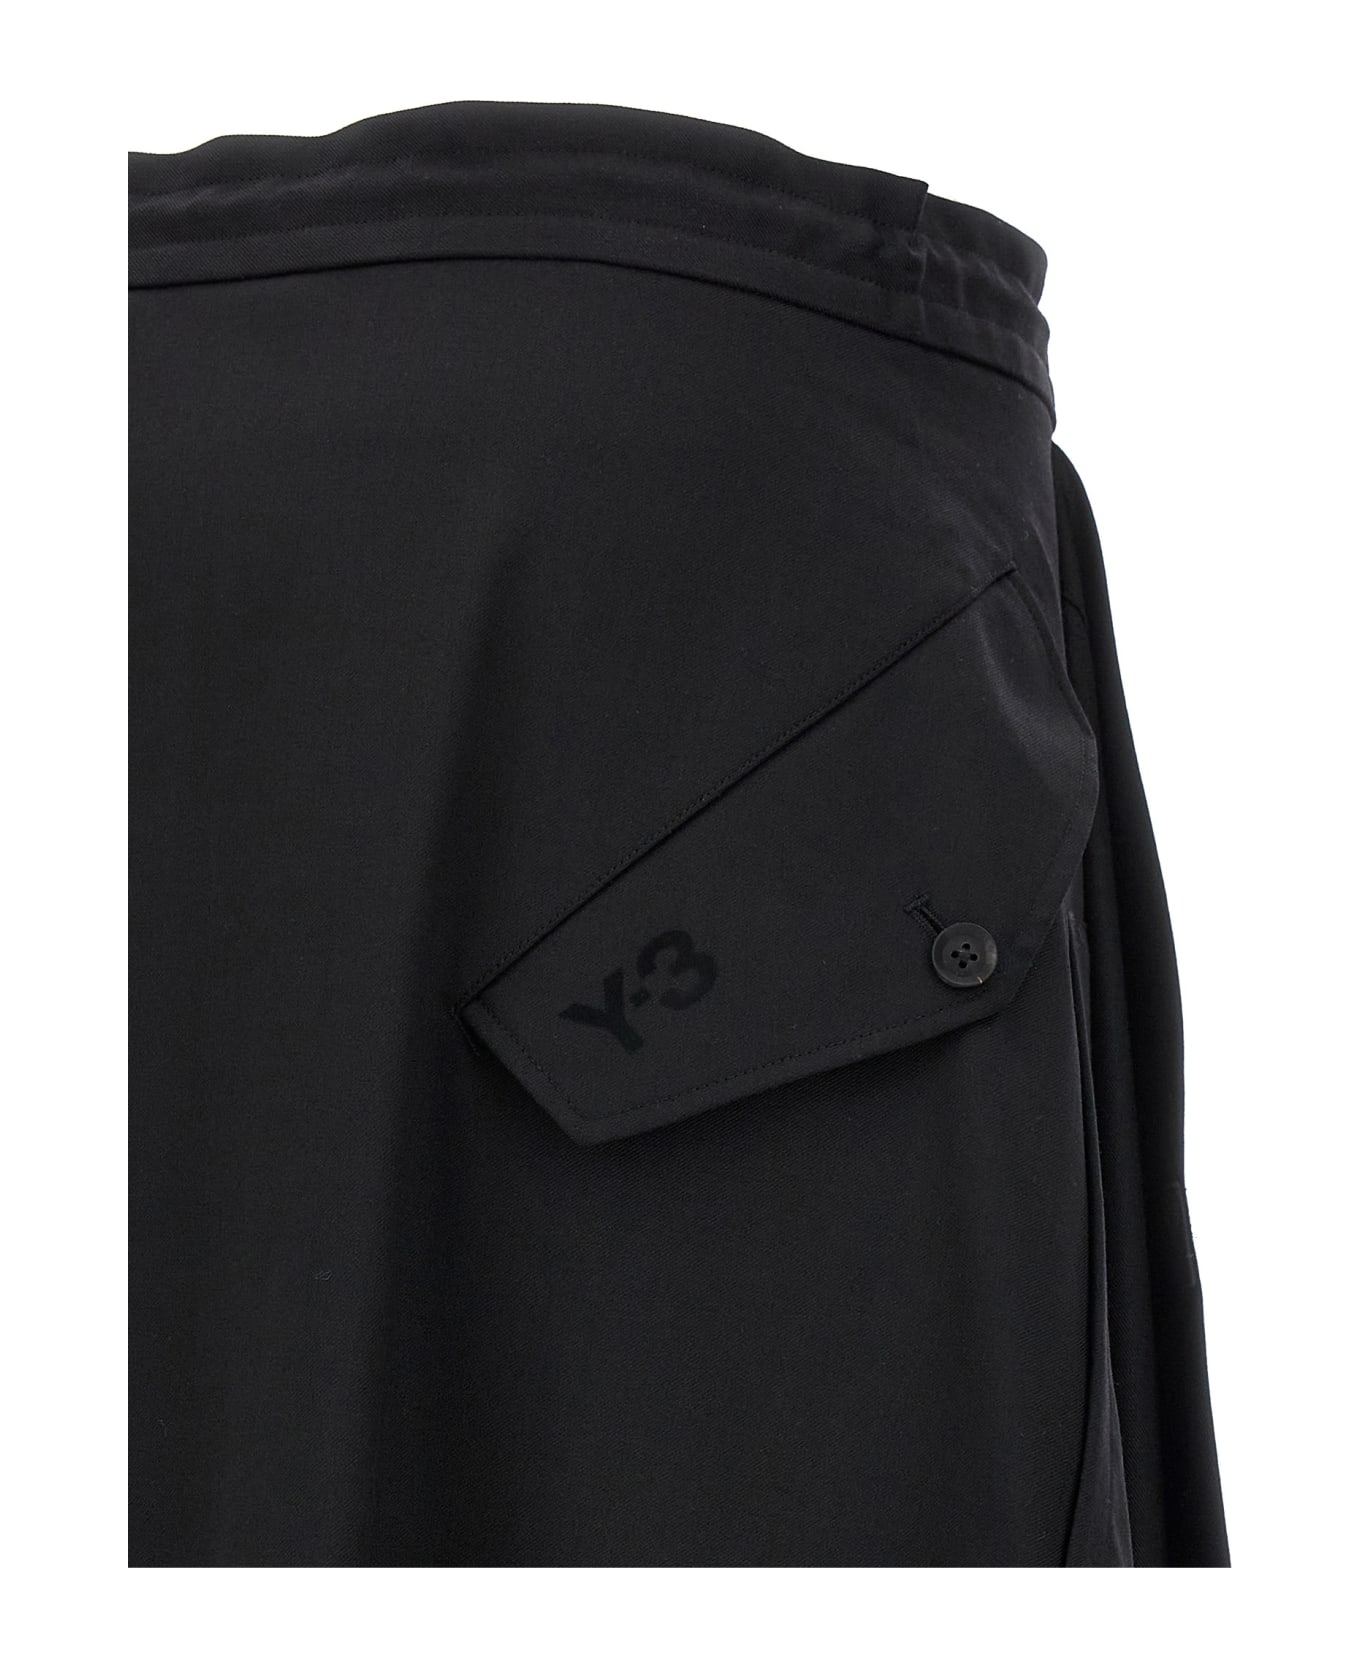 Y-3 Asymmetrical Skirt スカート